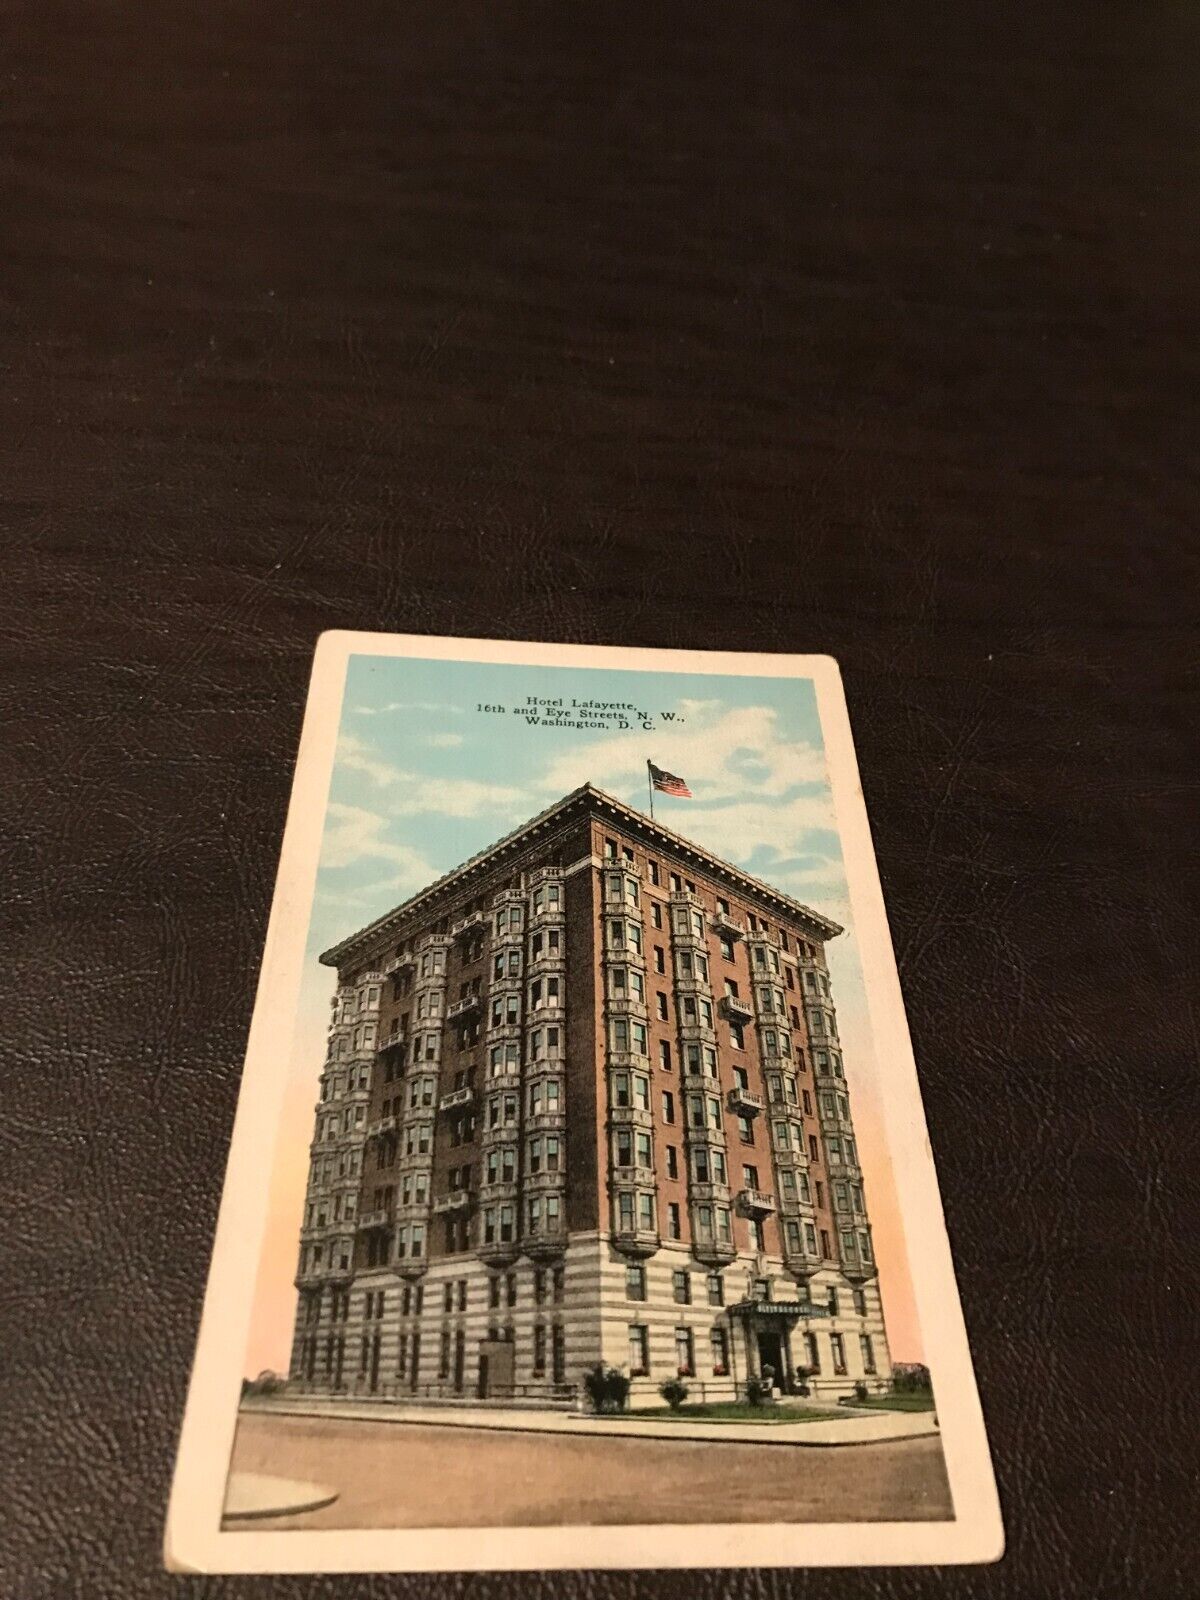 THE LAFAYETTE HOTEL - 16TH & EYE STREETS  - WASHINGTON D.C. - UNPOSTED POSTCARD